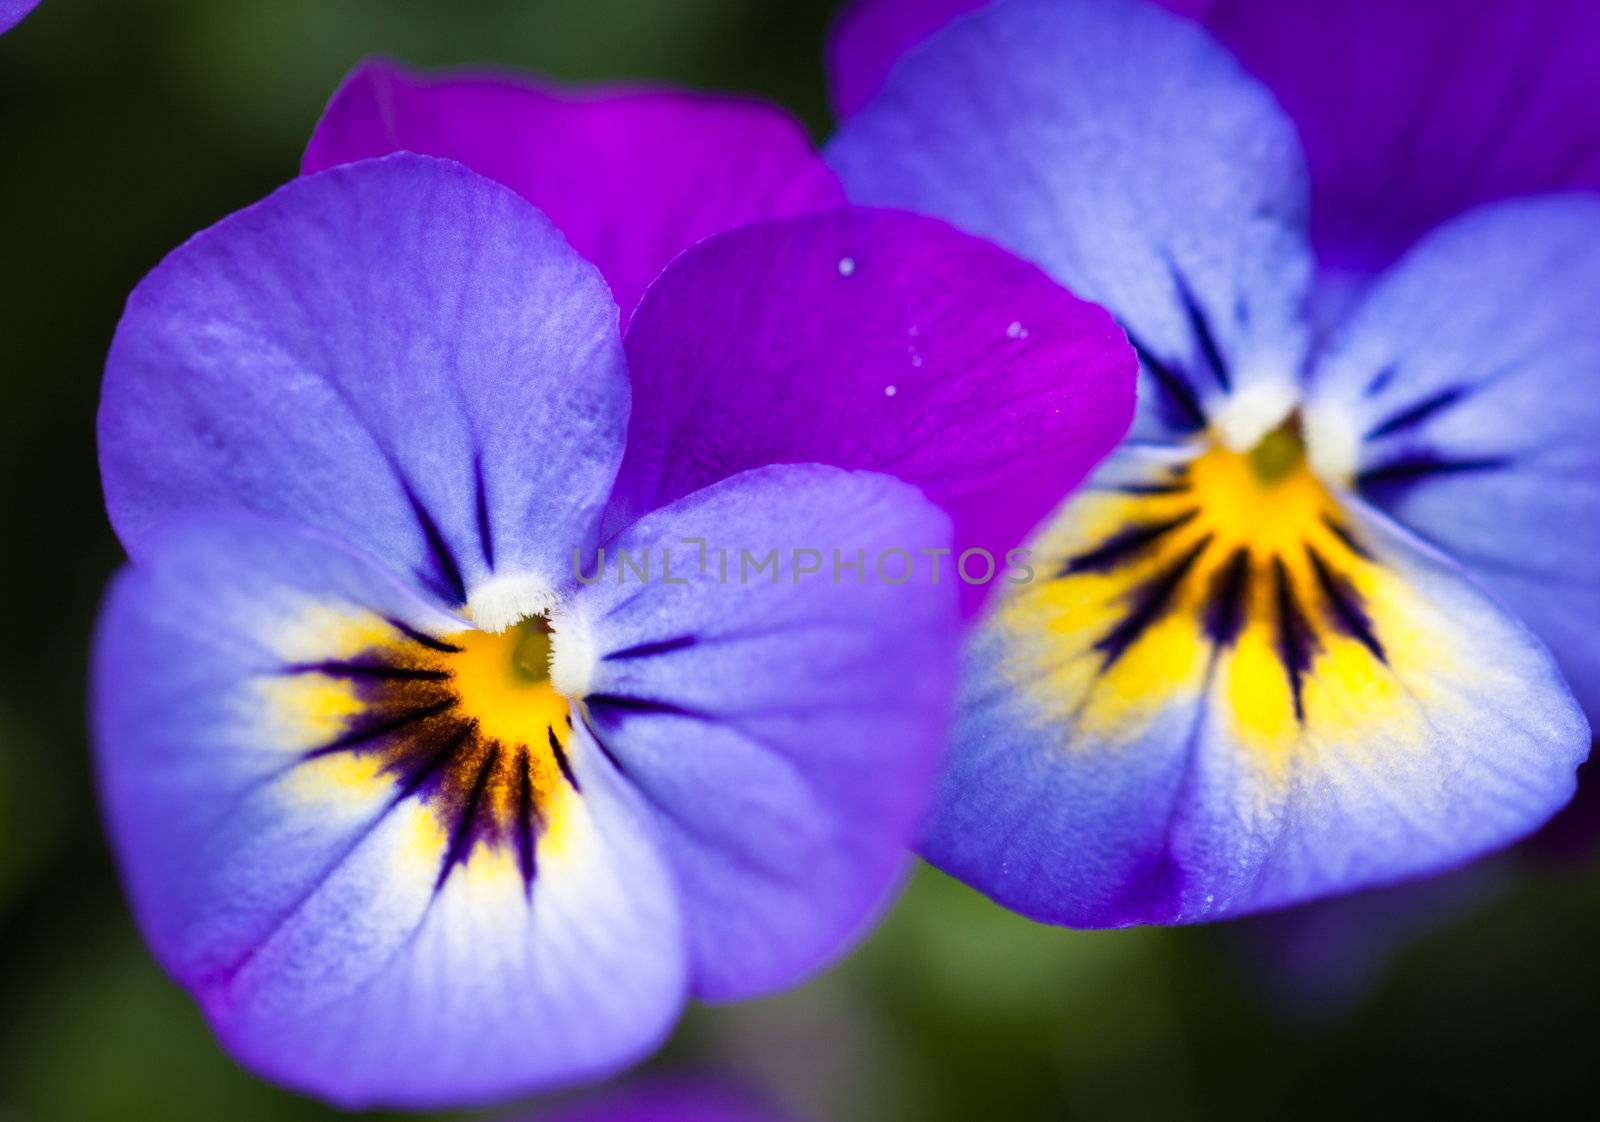 Two beautiful pansy flowers by Jaykayl